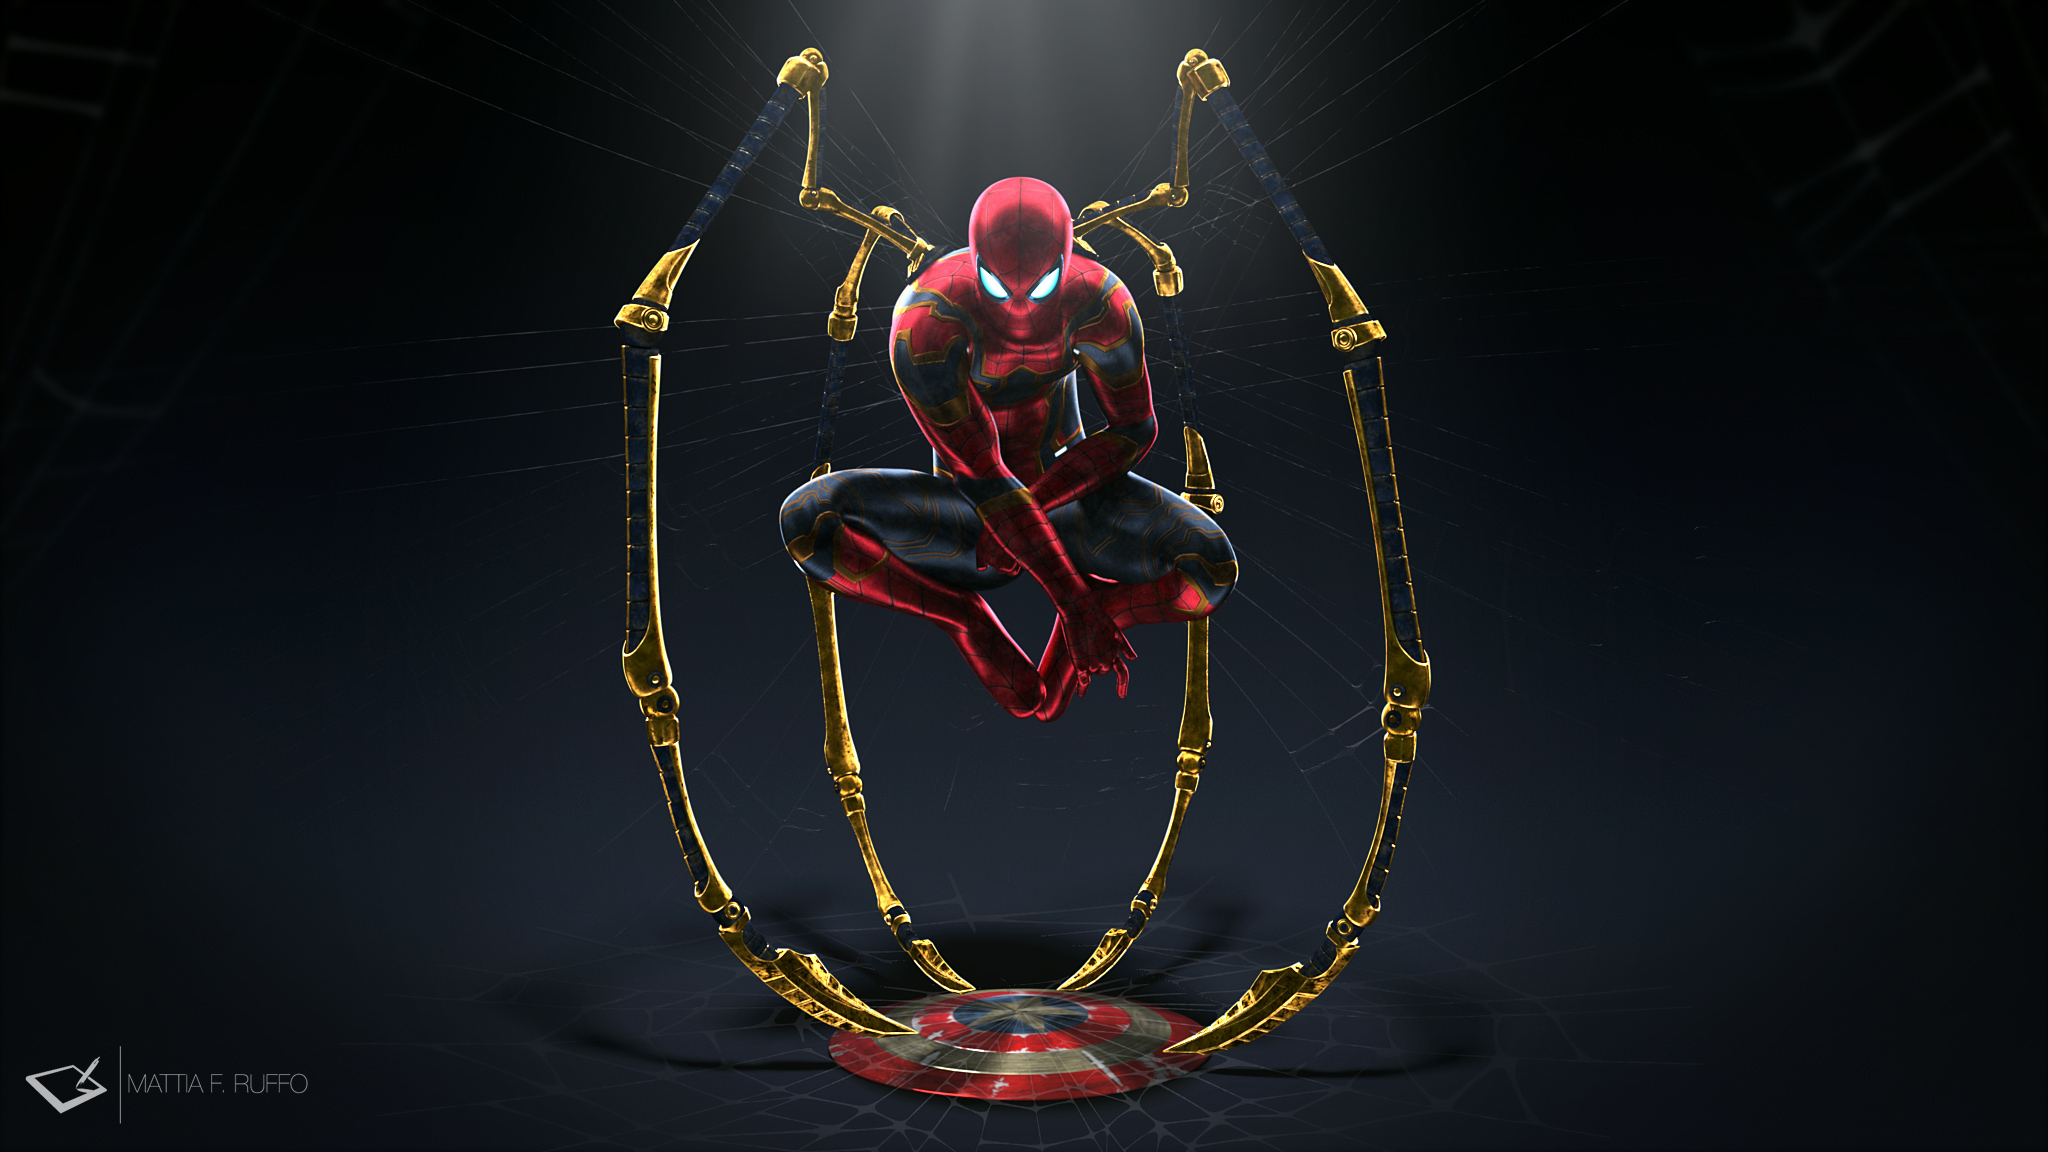 fond d'écran spiderman hd,performance,acrobaties,personnage fictif,cirque,super héros